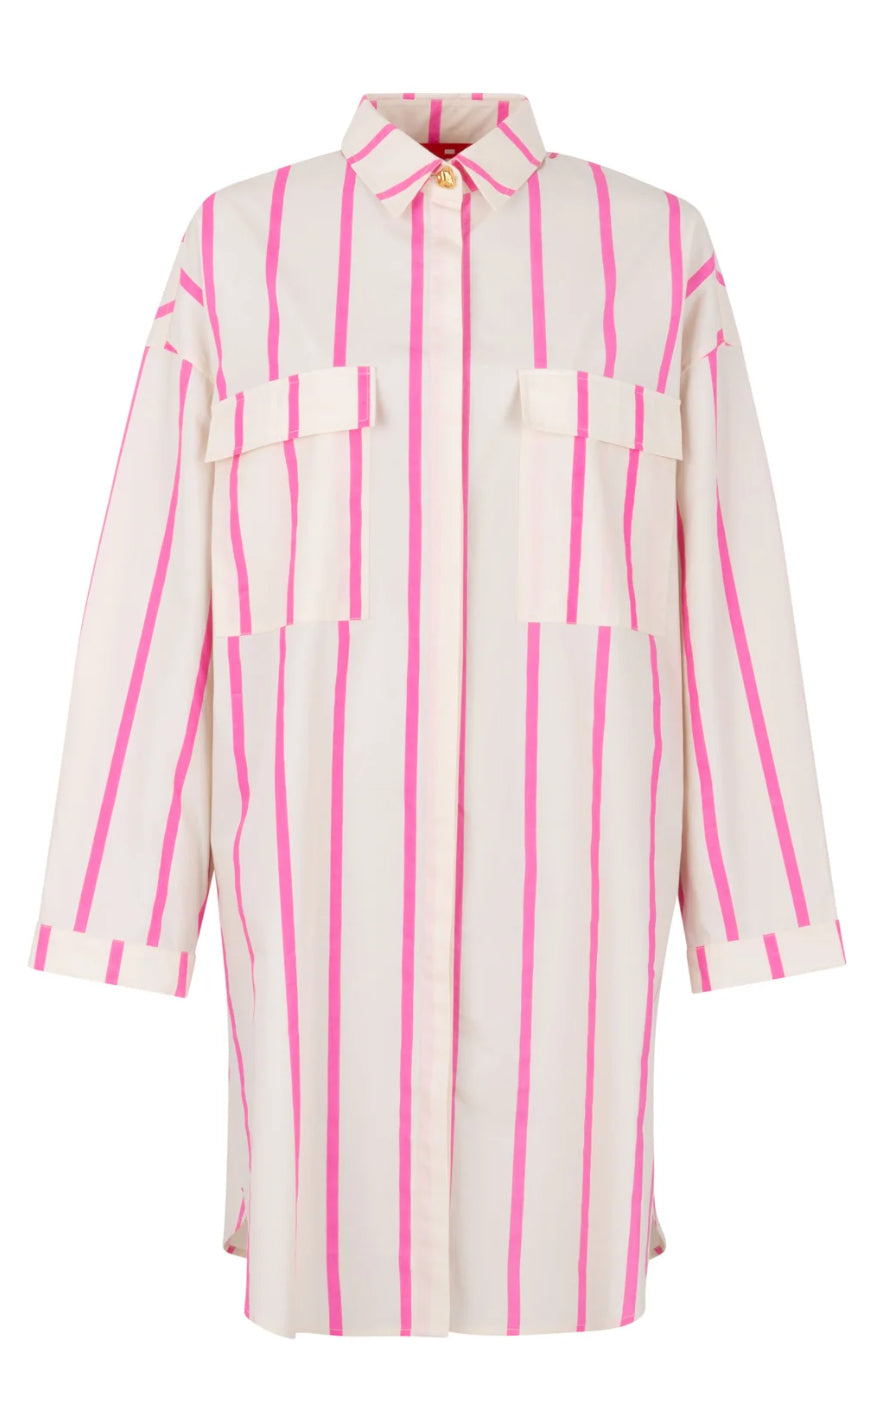 Se Cras Skjorte - Flax - Pink Stripe hos Fashionbystrand